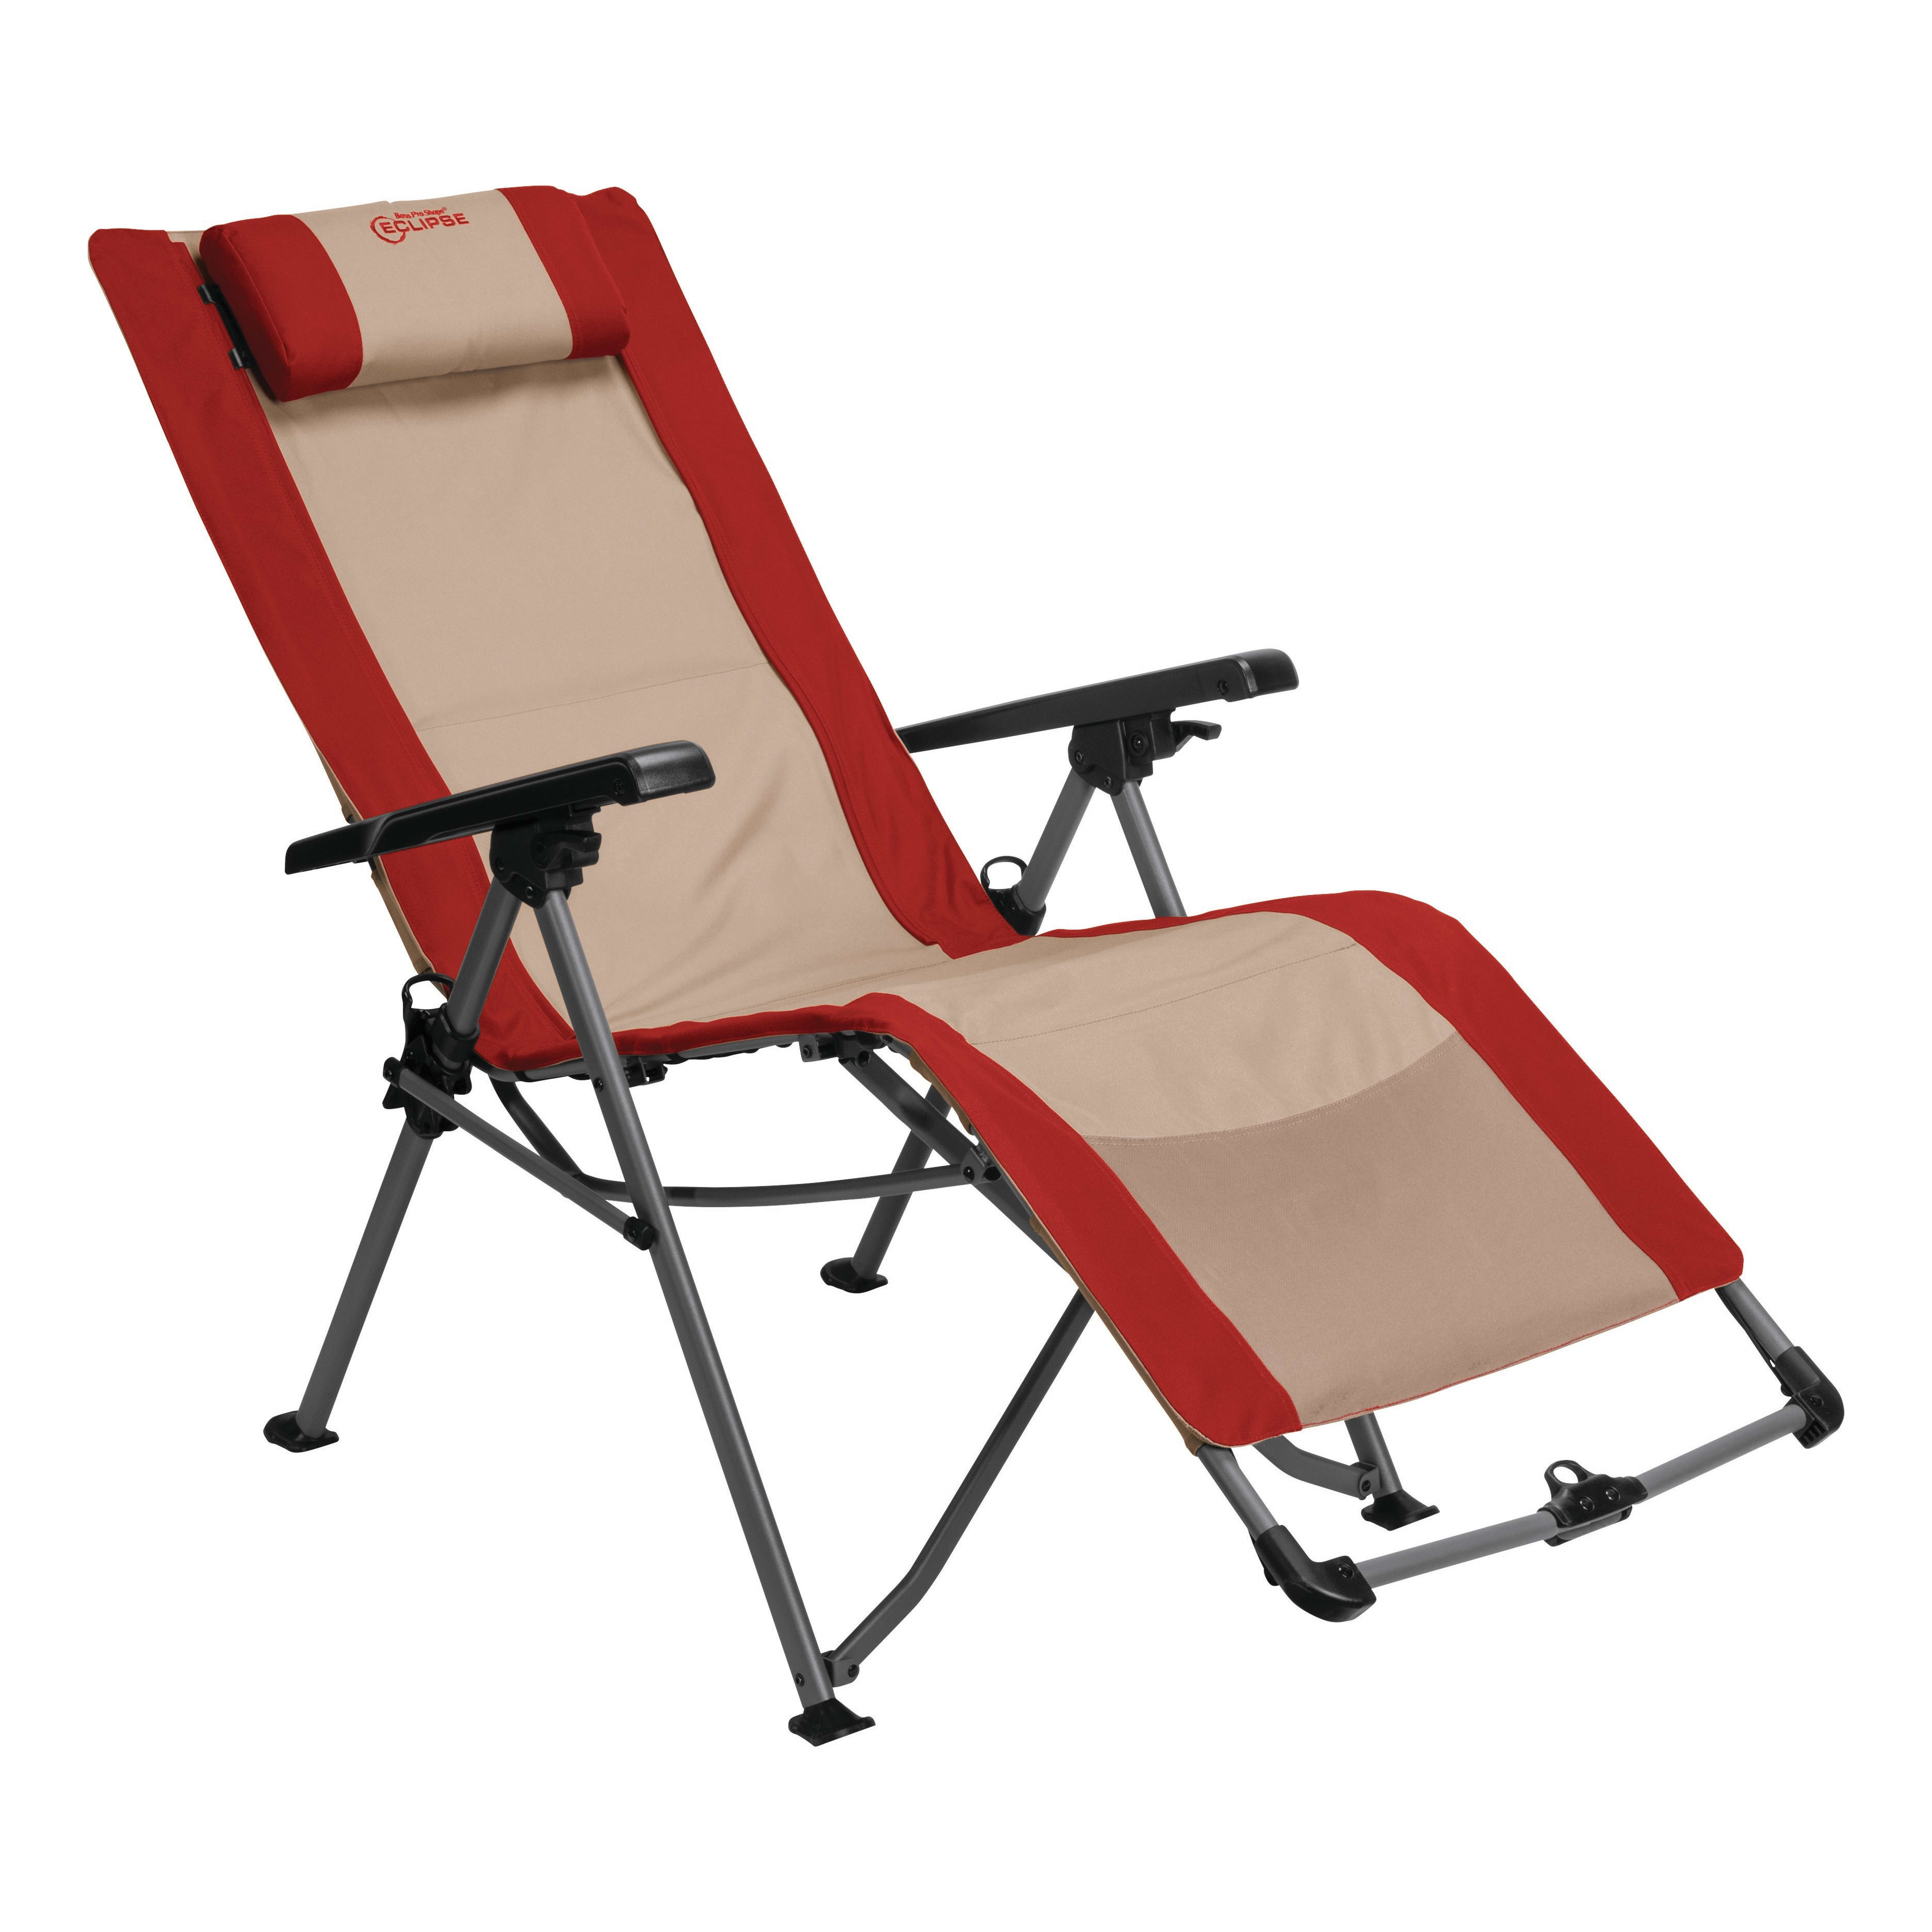 Bass Pro Shops® Eclipse Zero-Gravity Lounge Chair 